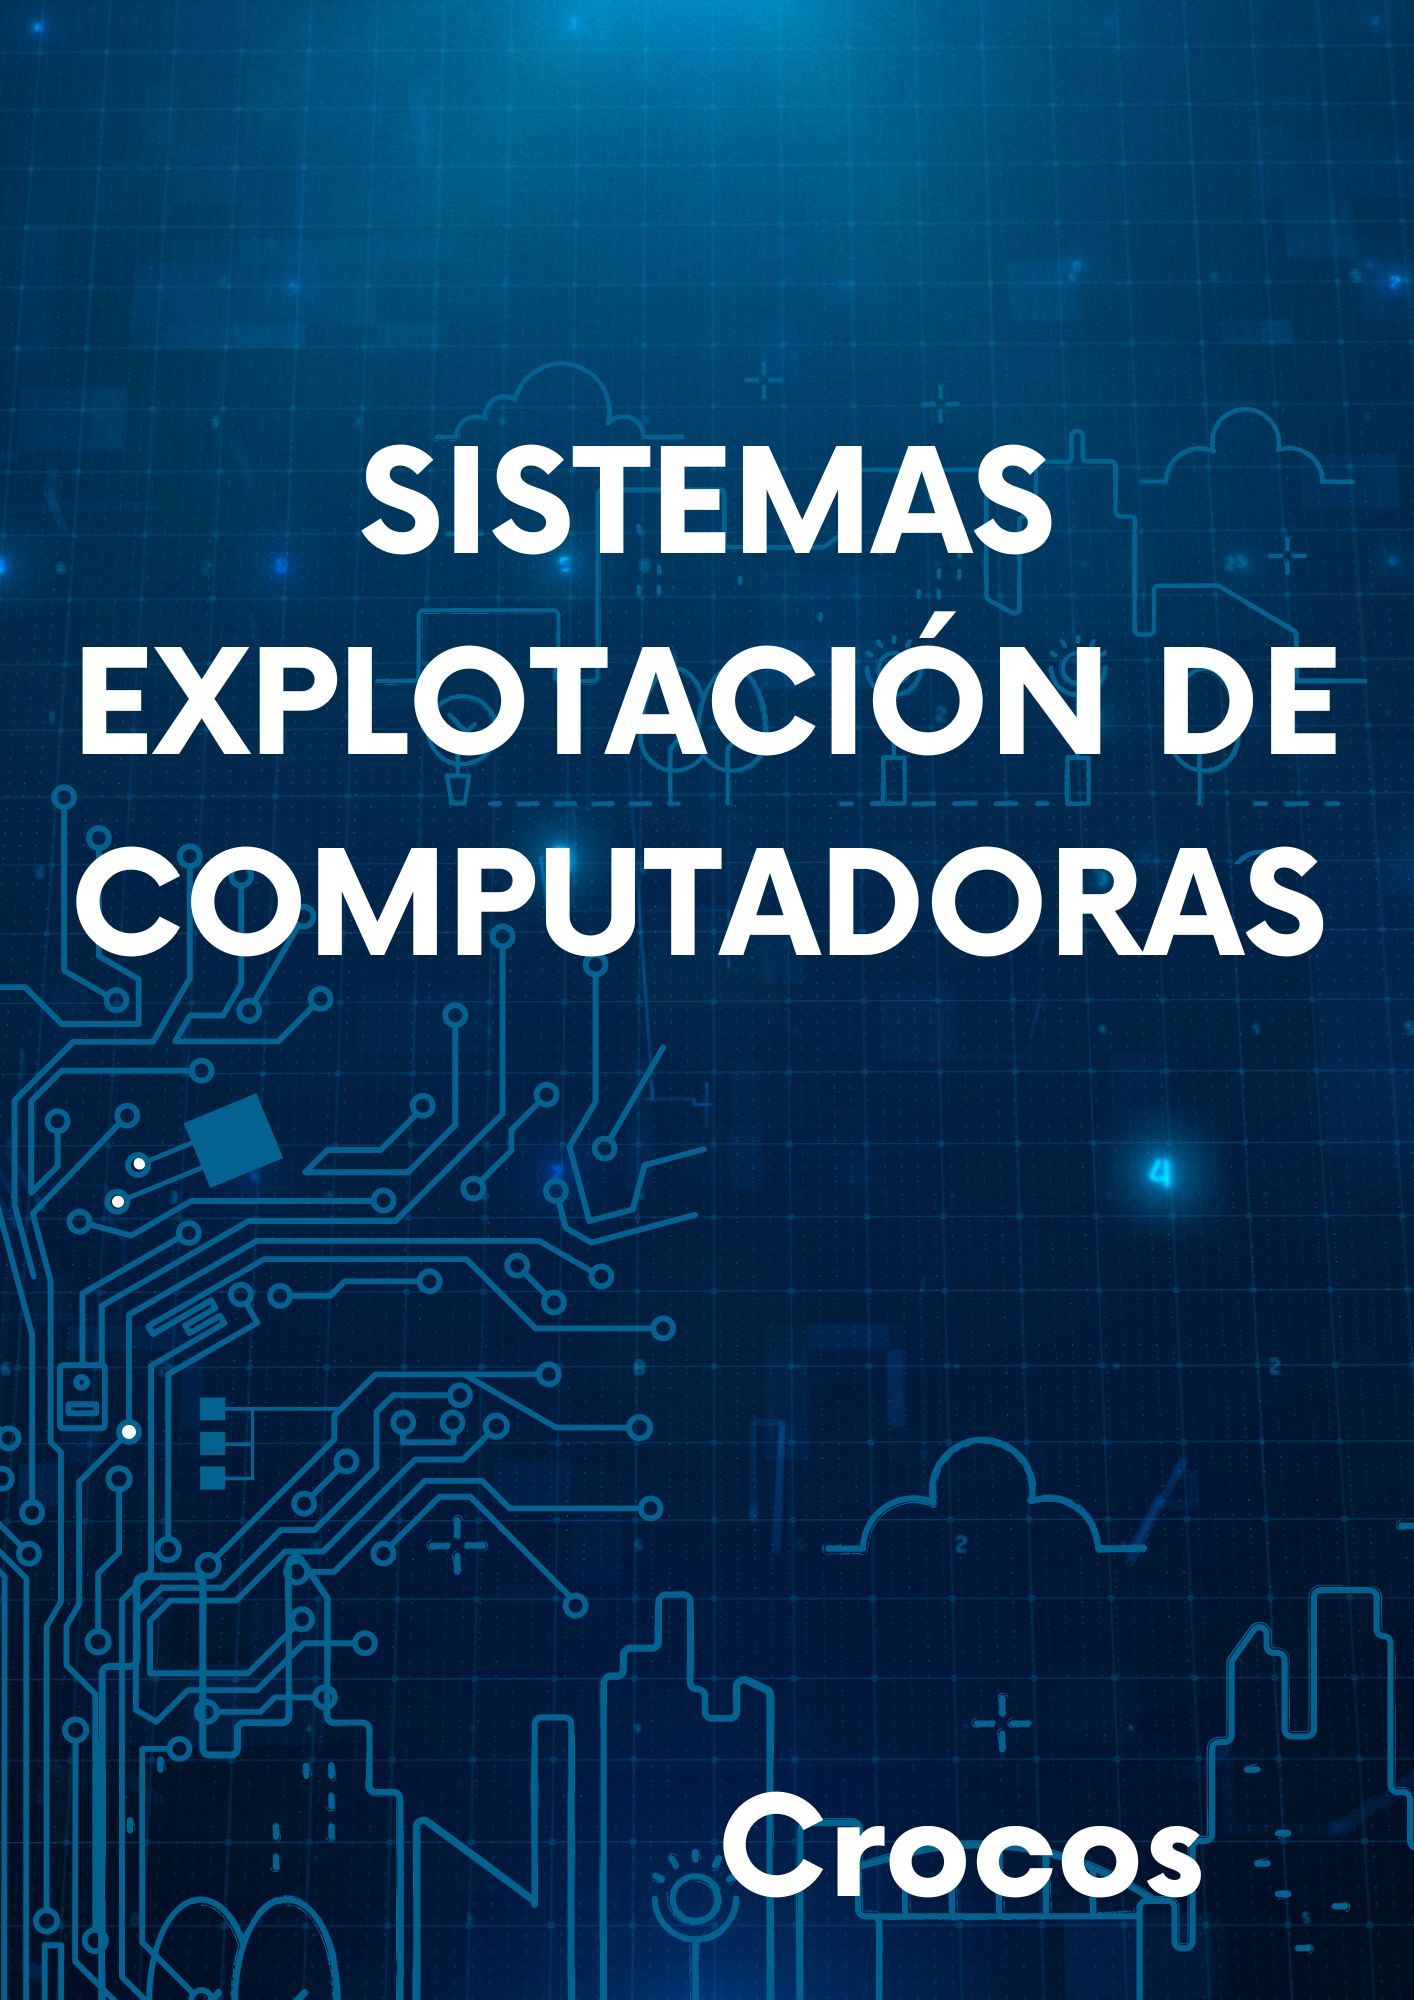 Libro: Sistemas Explotación de Computadoras por Crocos